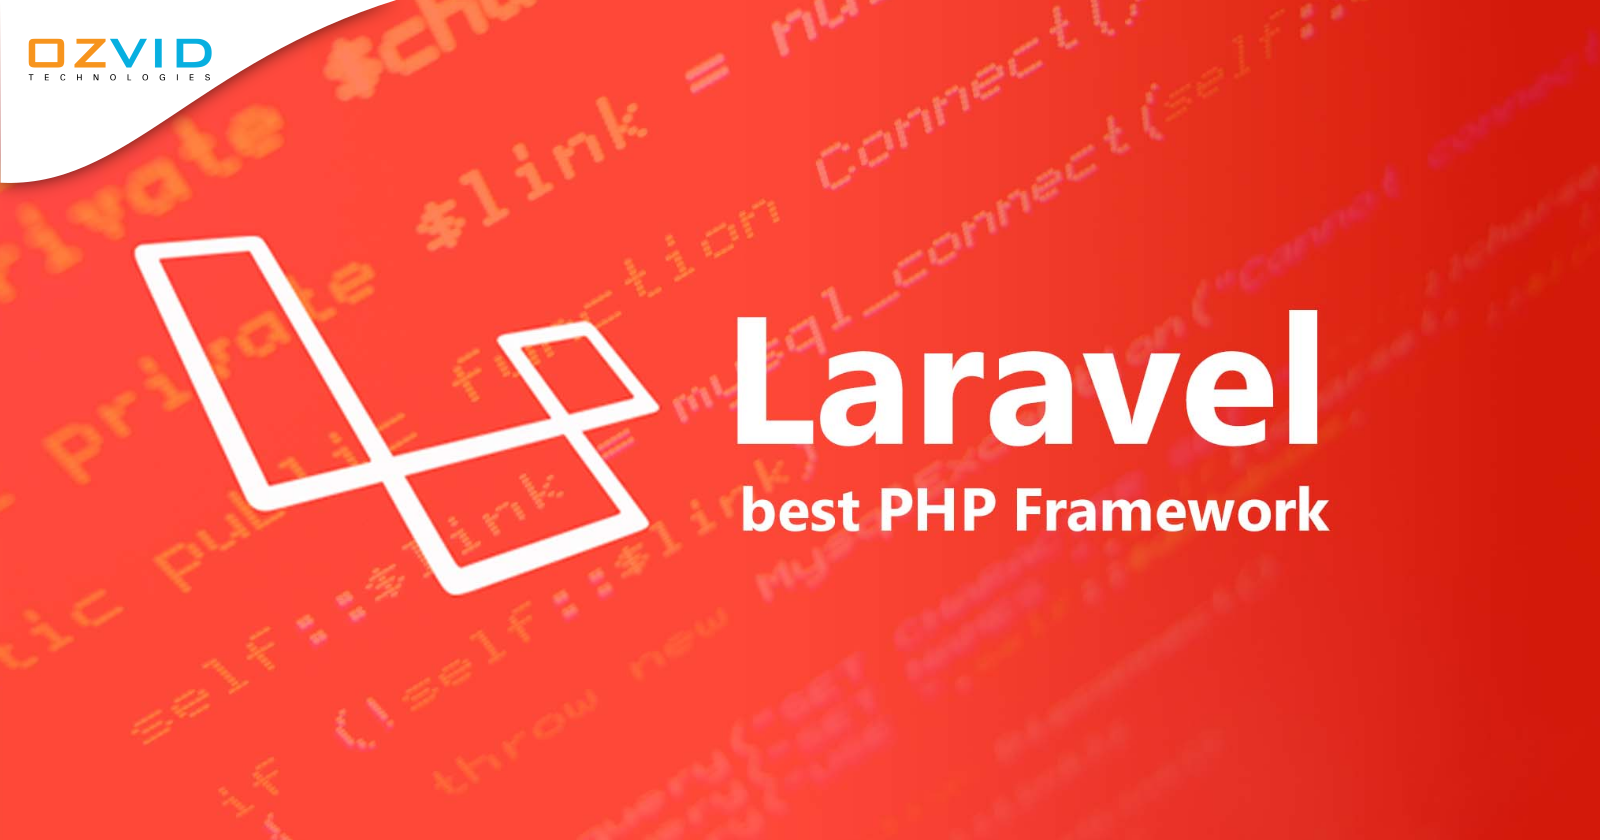 Reasons Why Laravel Framework is More Preferred Over Other PHP Frameworks